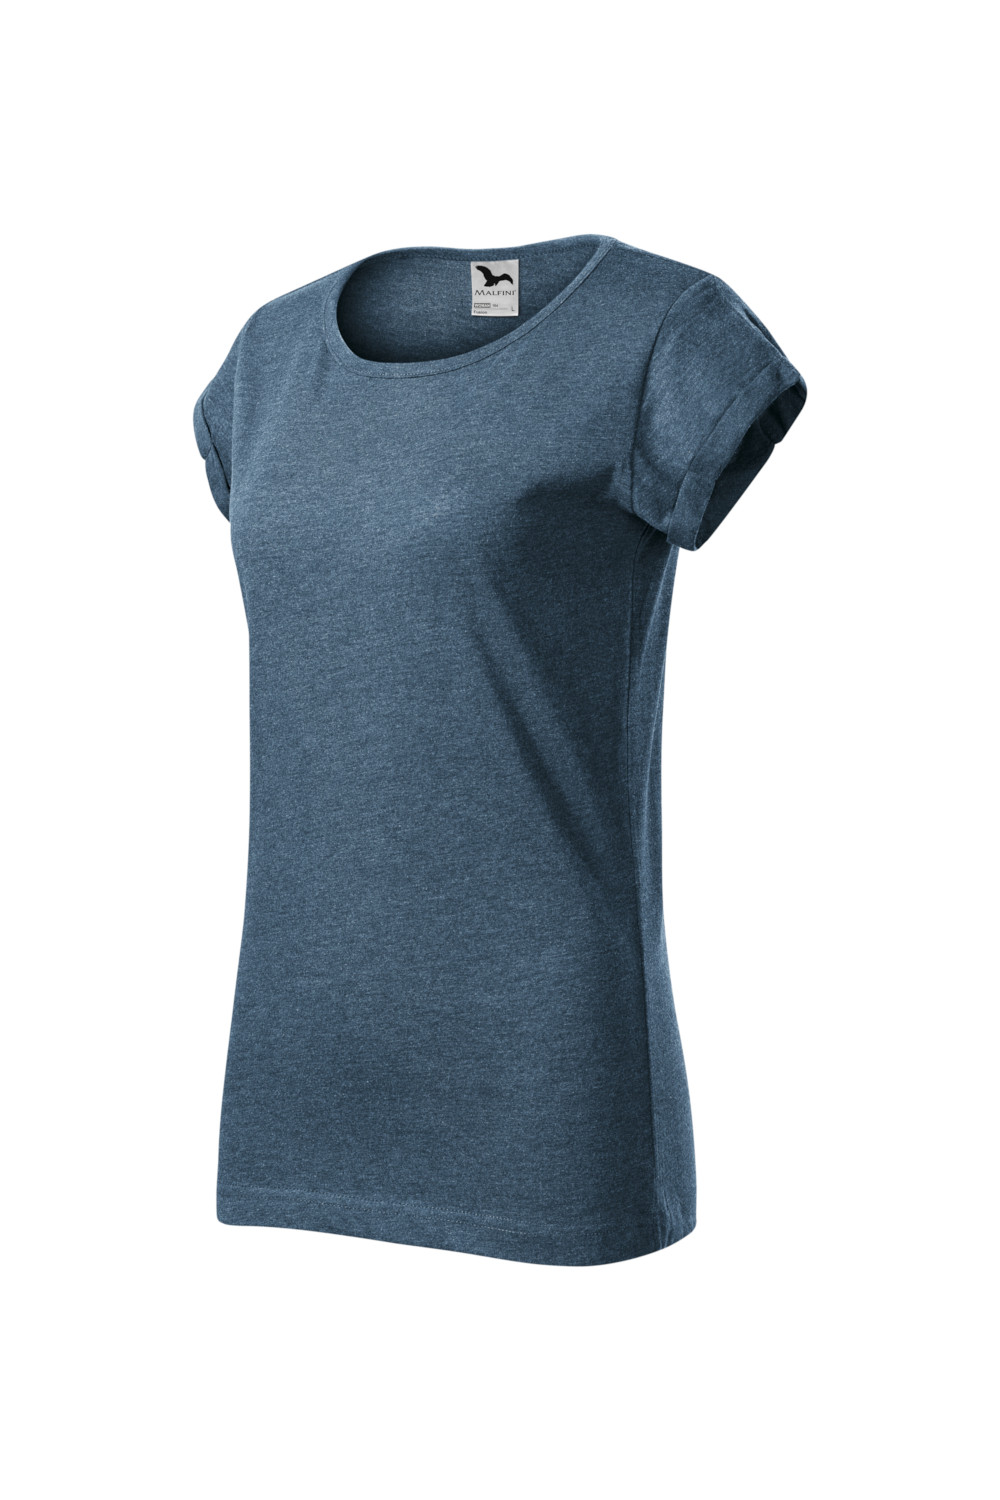 Koszulka damska melanżowa FUSION 164 koszulki / T-shirt ciemny denim melanż M2